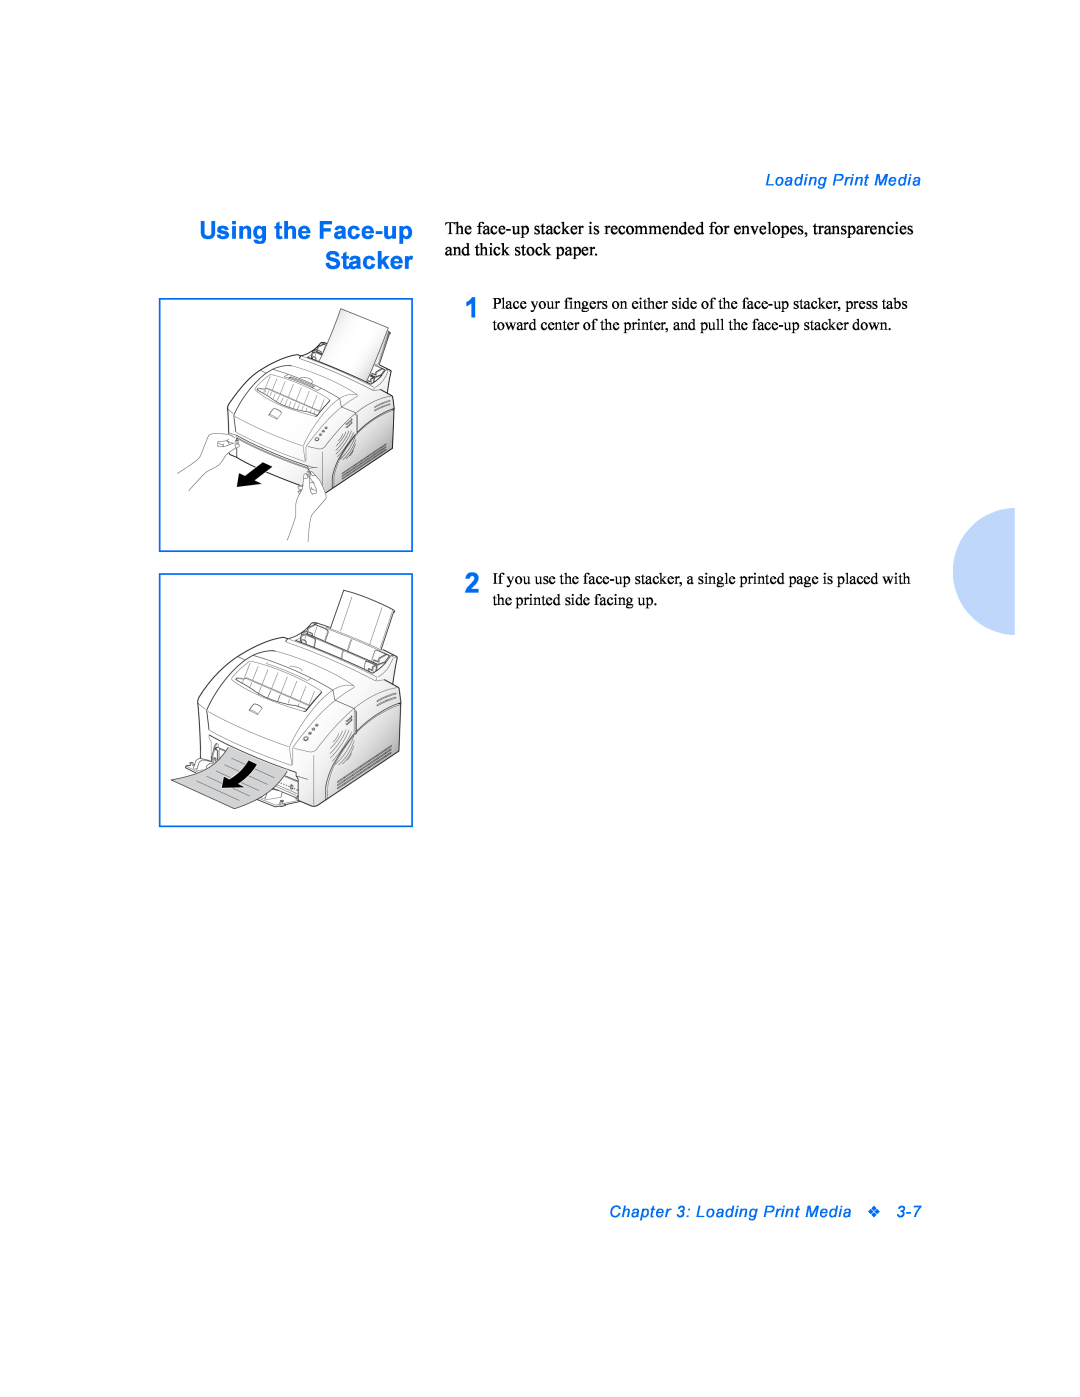 Xerox P8EX manual Using the Face-upStacker, Loading Print Media 